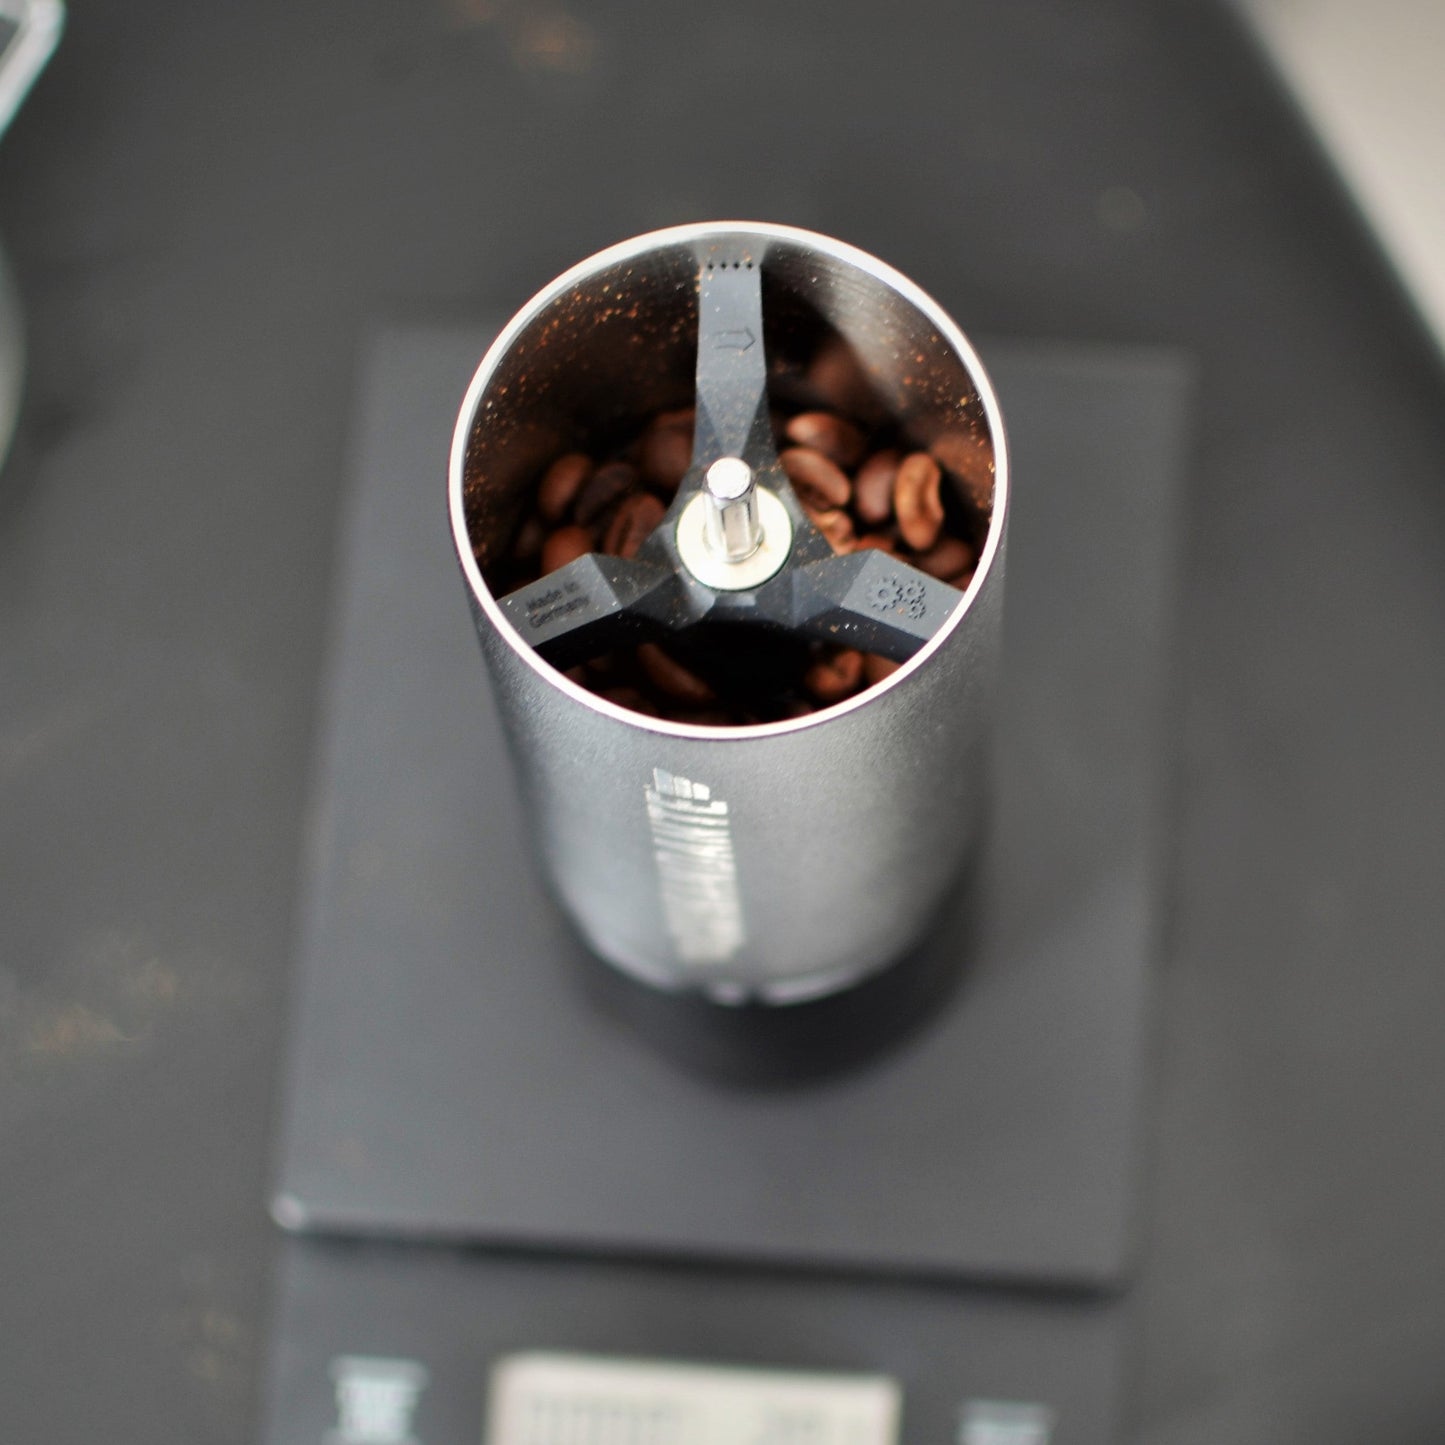 Comandante C40 Nitro Blade Hand grinder - Gust Coffee Roasters, hand grinder, best coffee grinder, grinding coffee